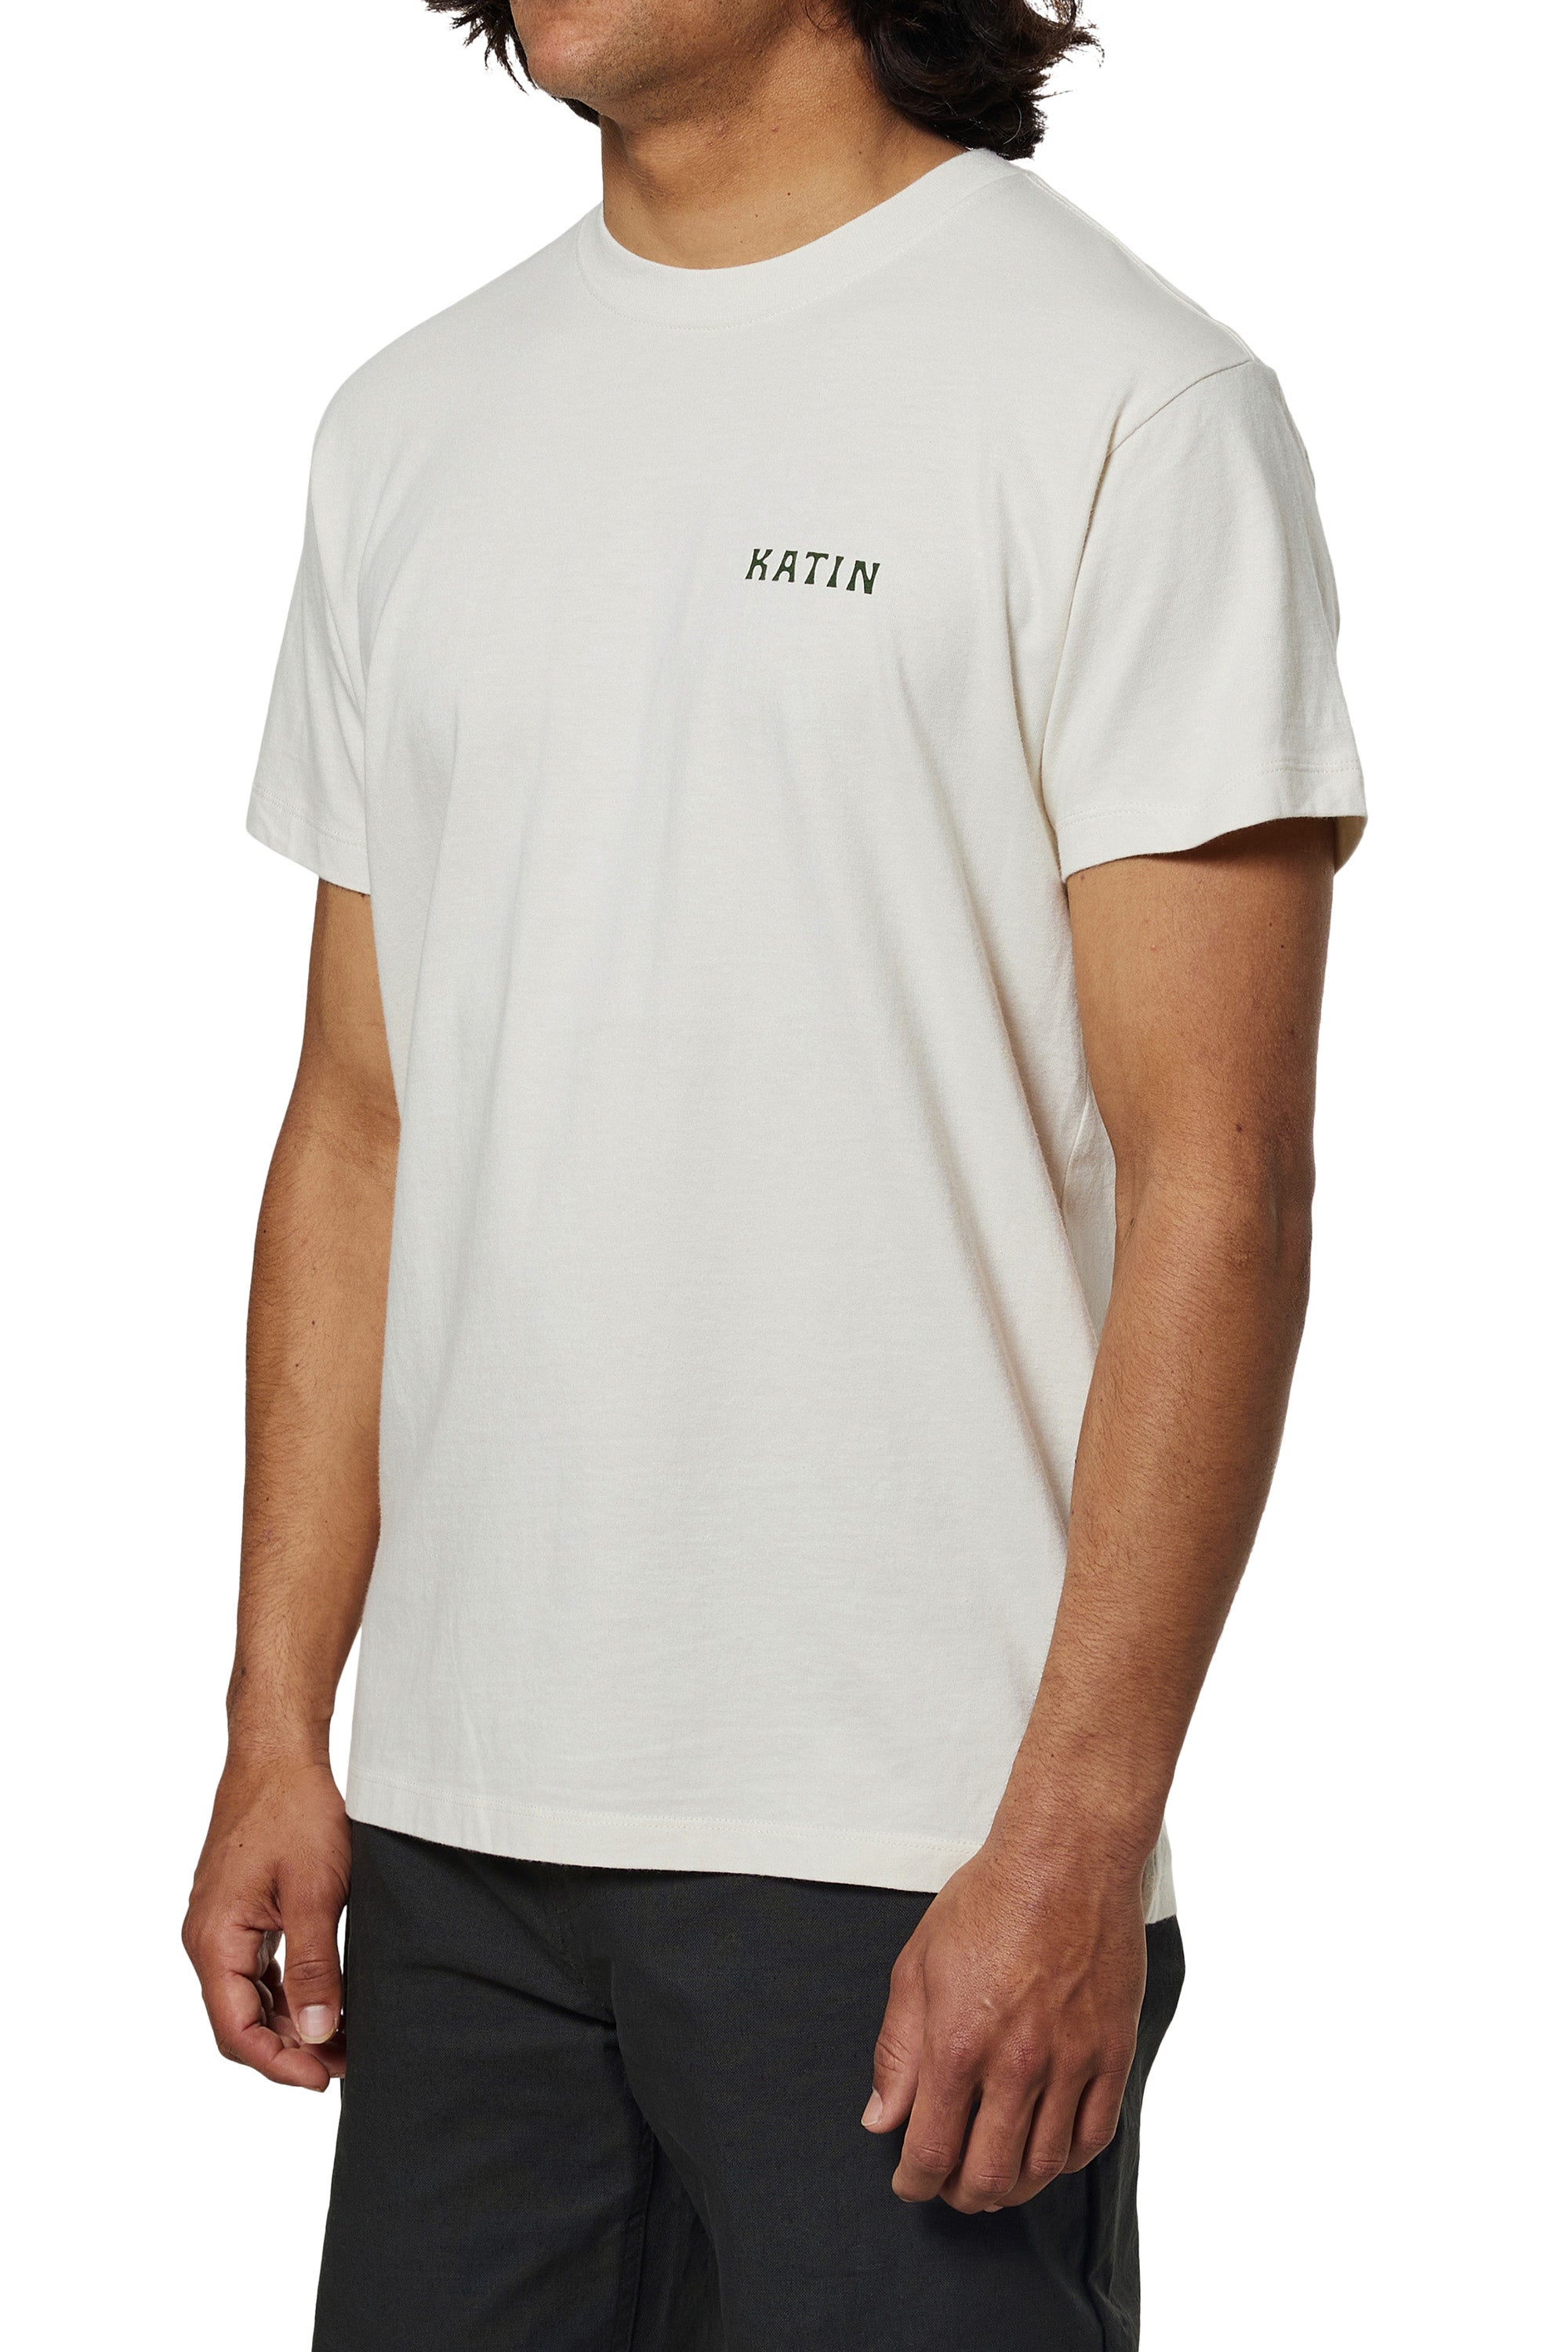 Vista-T-Shirt | Katin USA